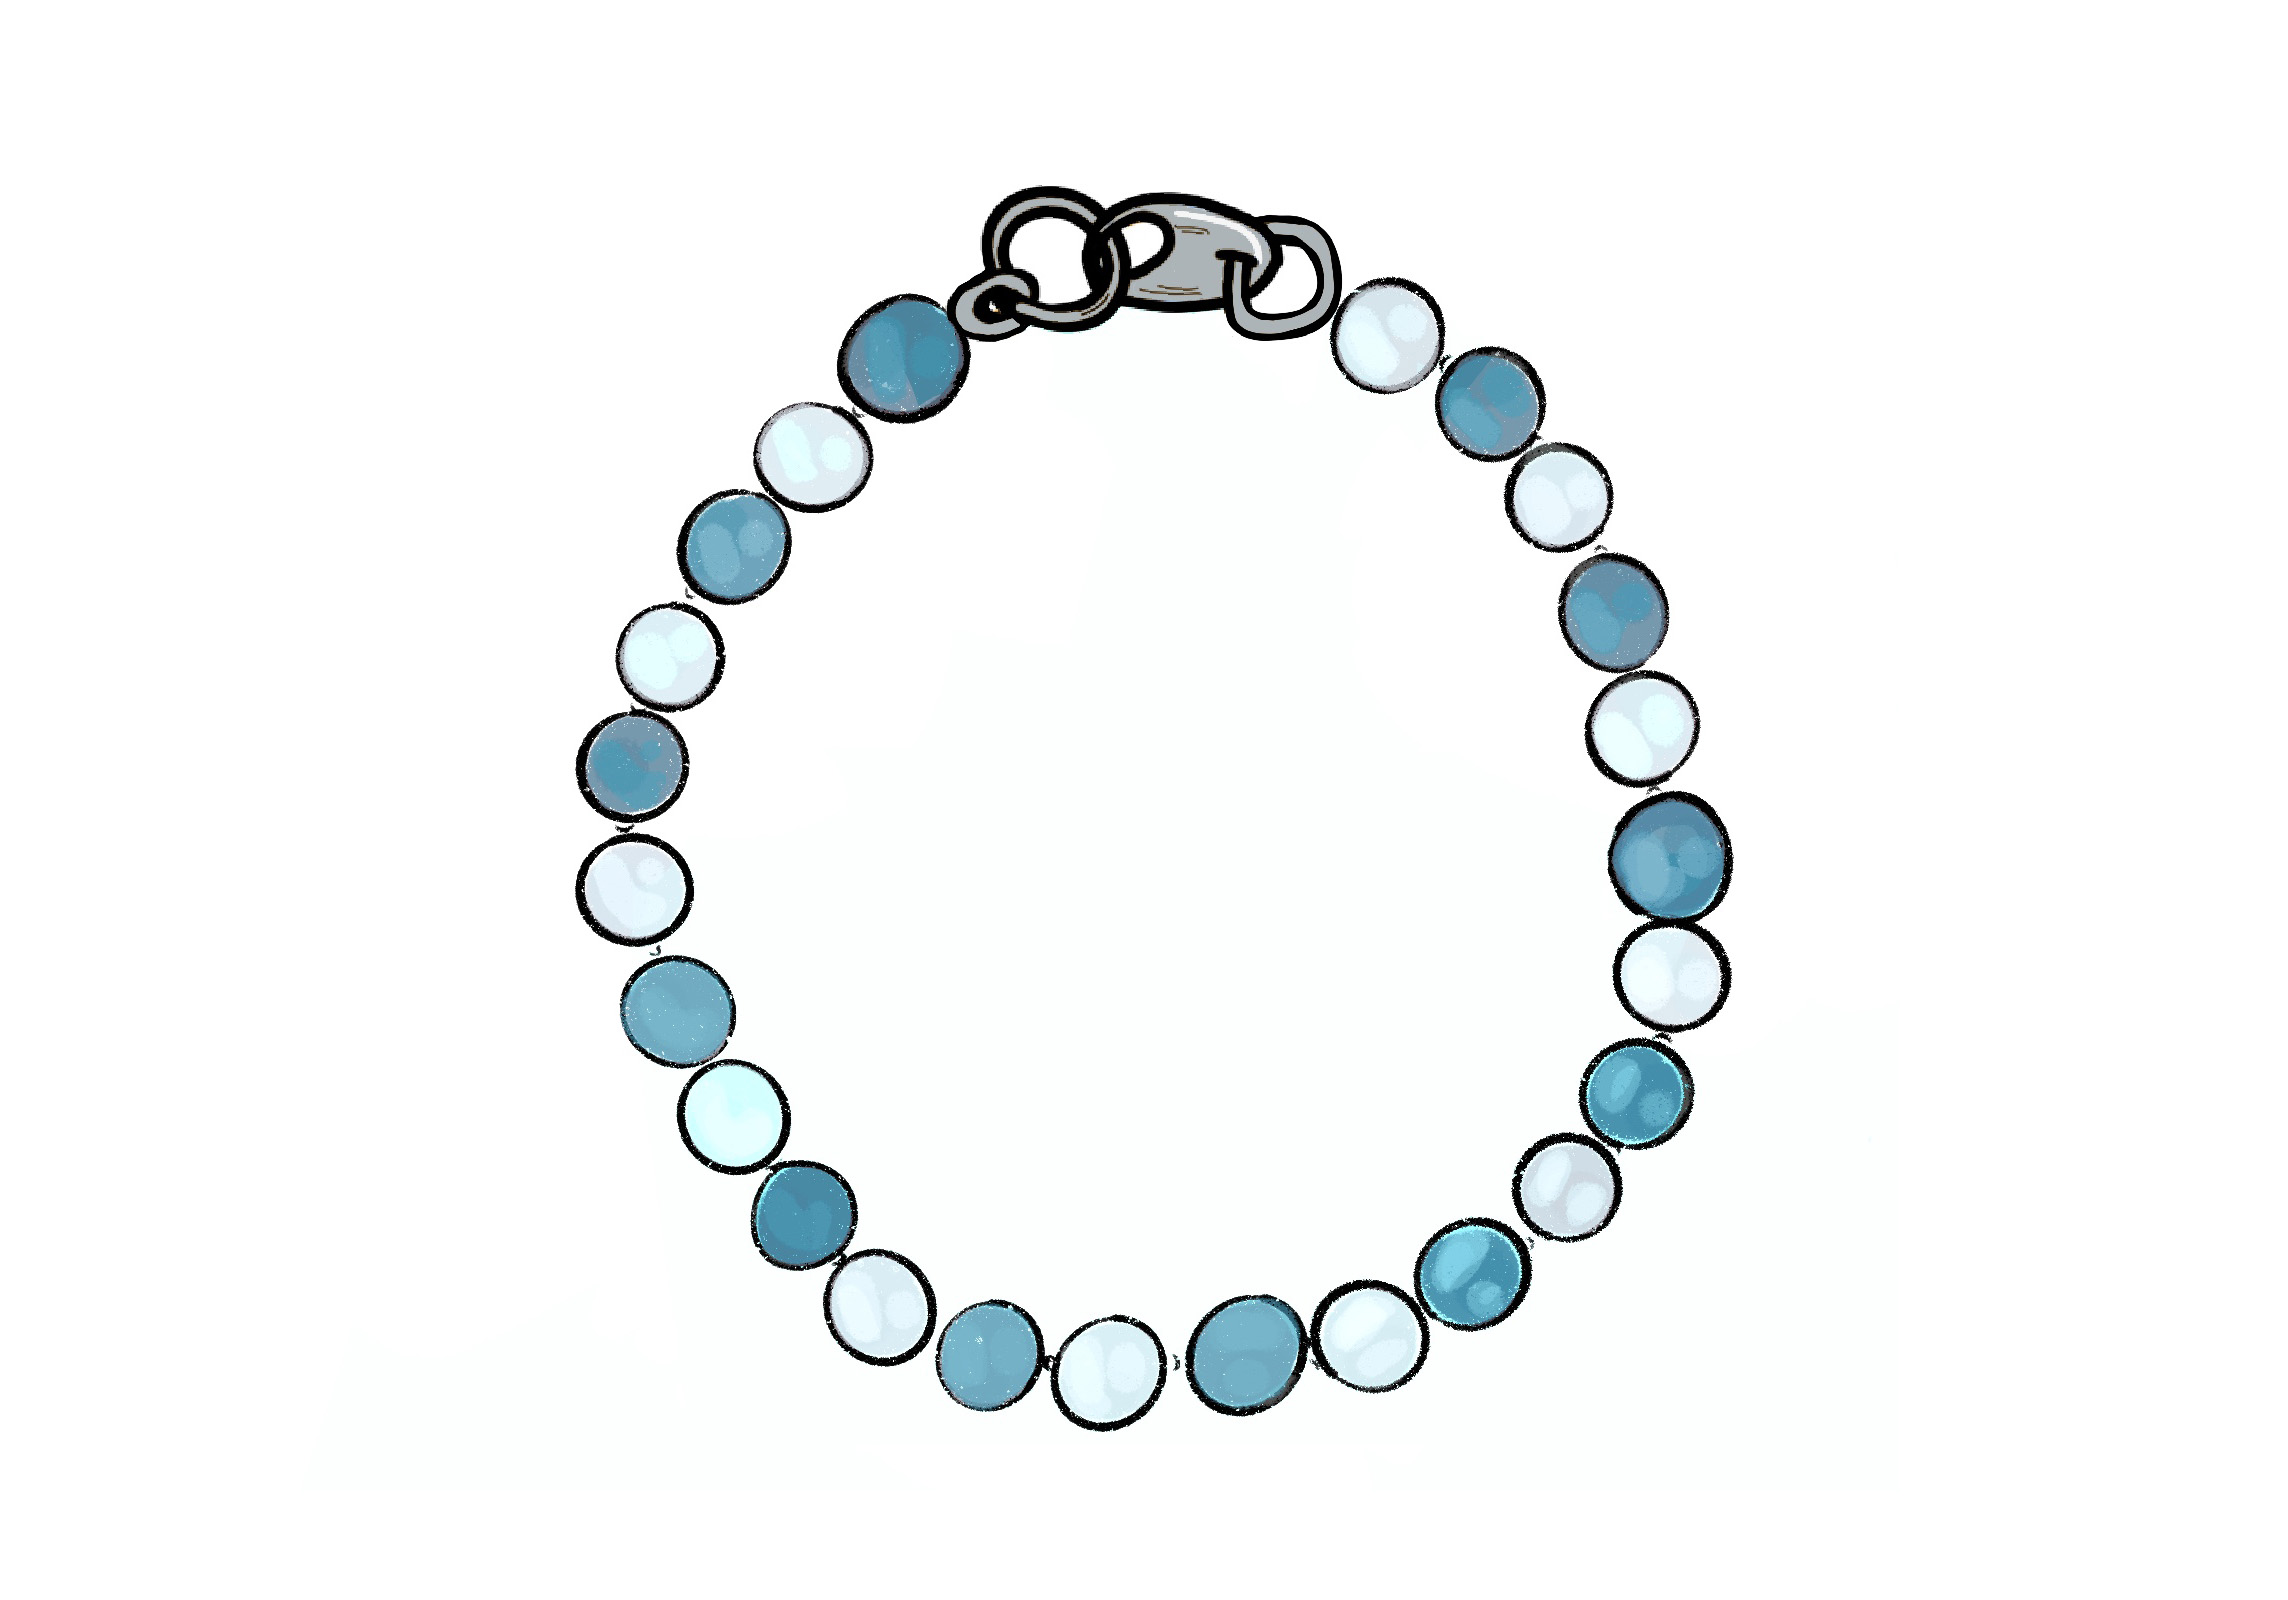 Men Circle Bracelet  Name Strings  Personalized Jewelery